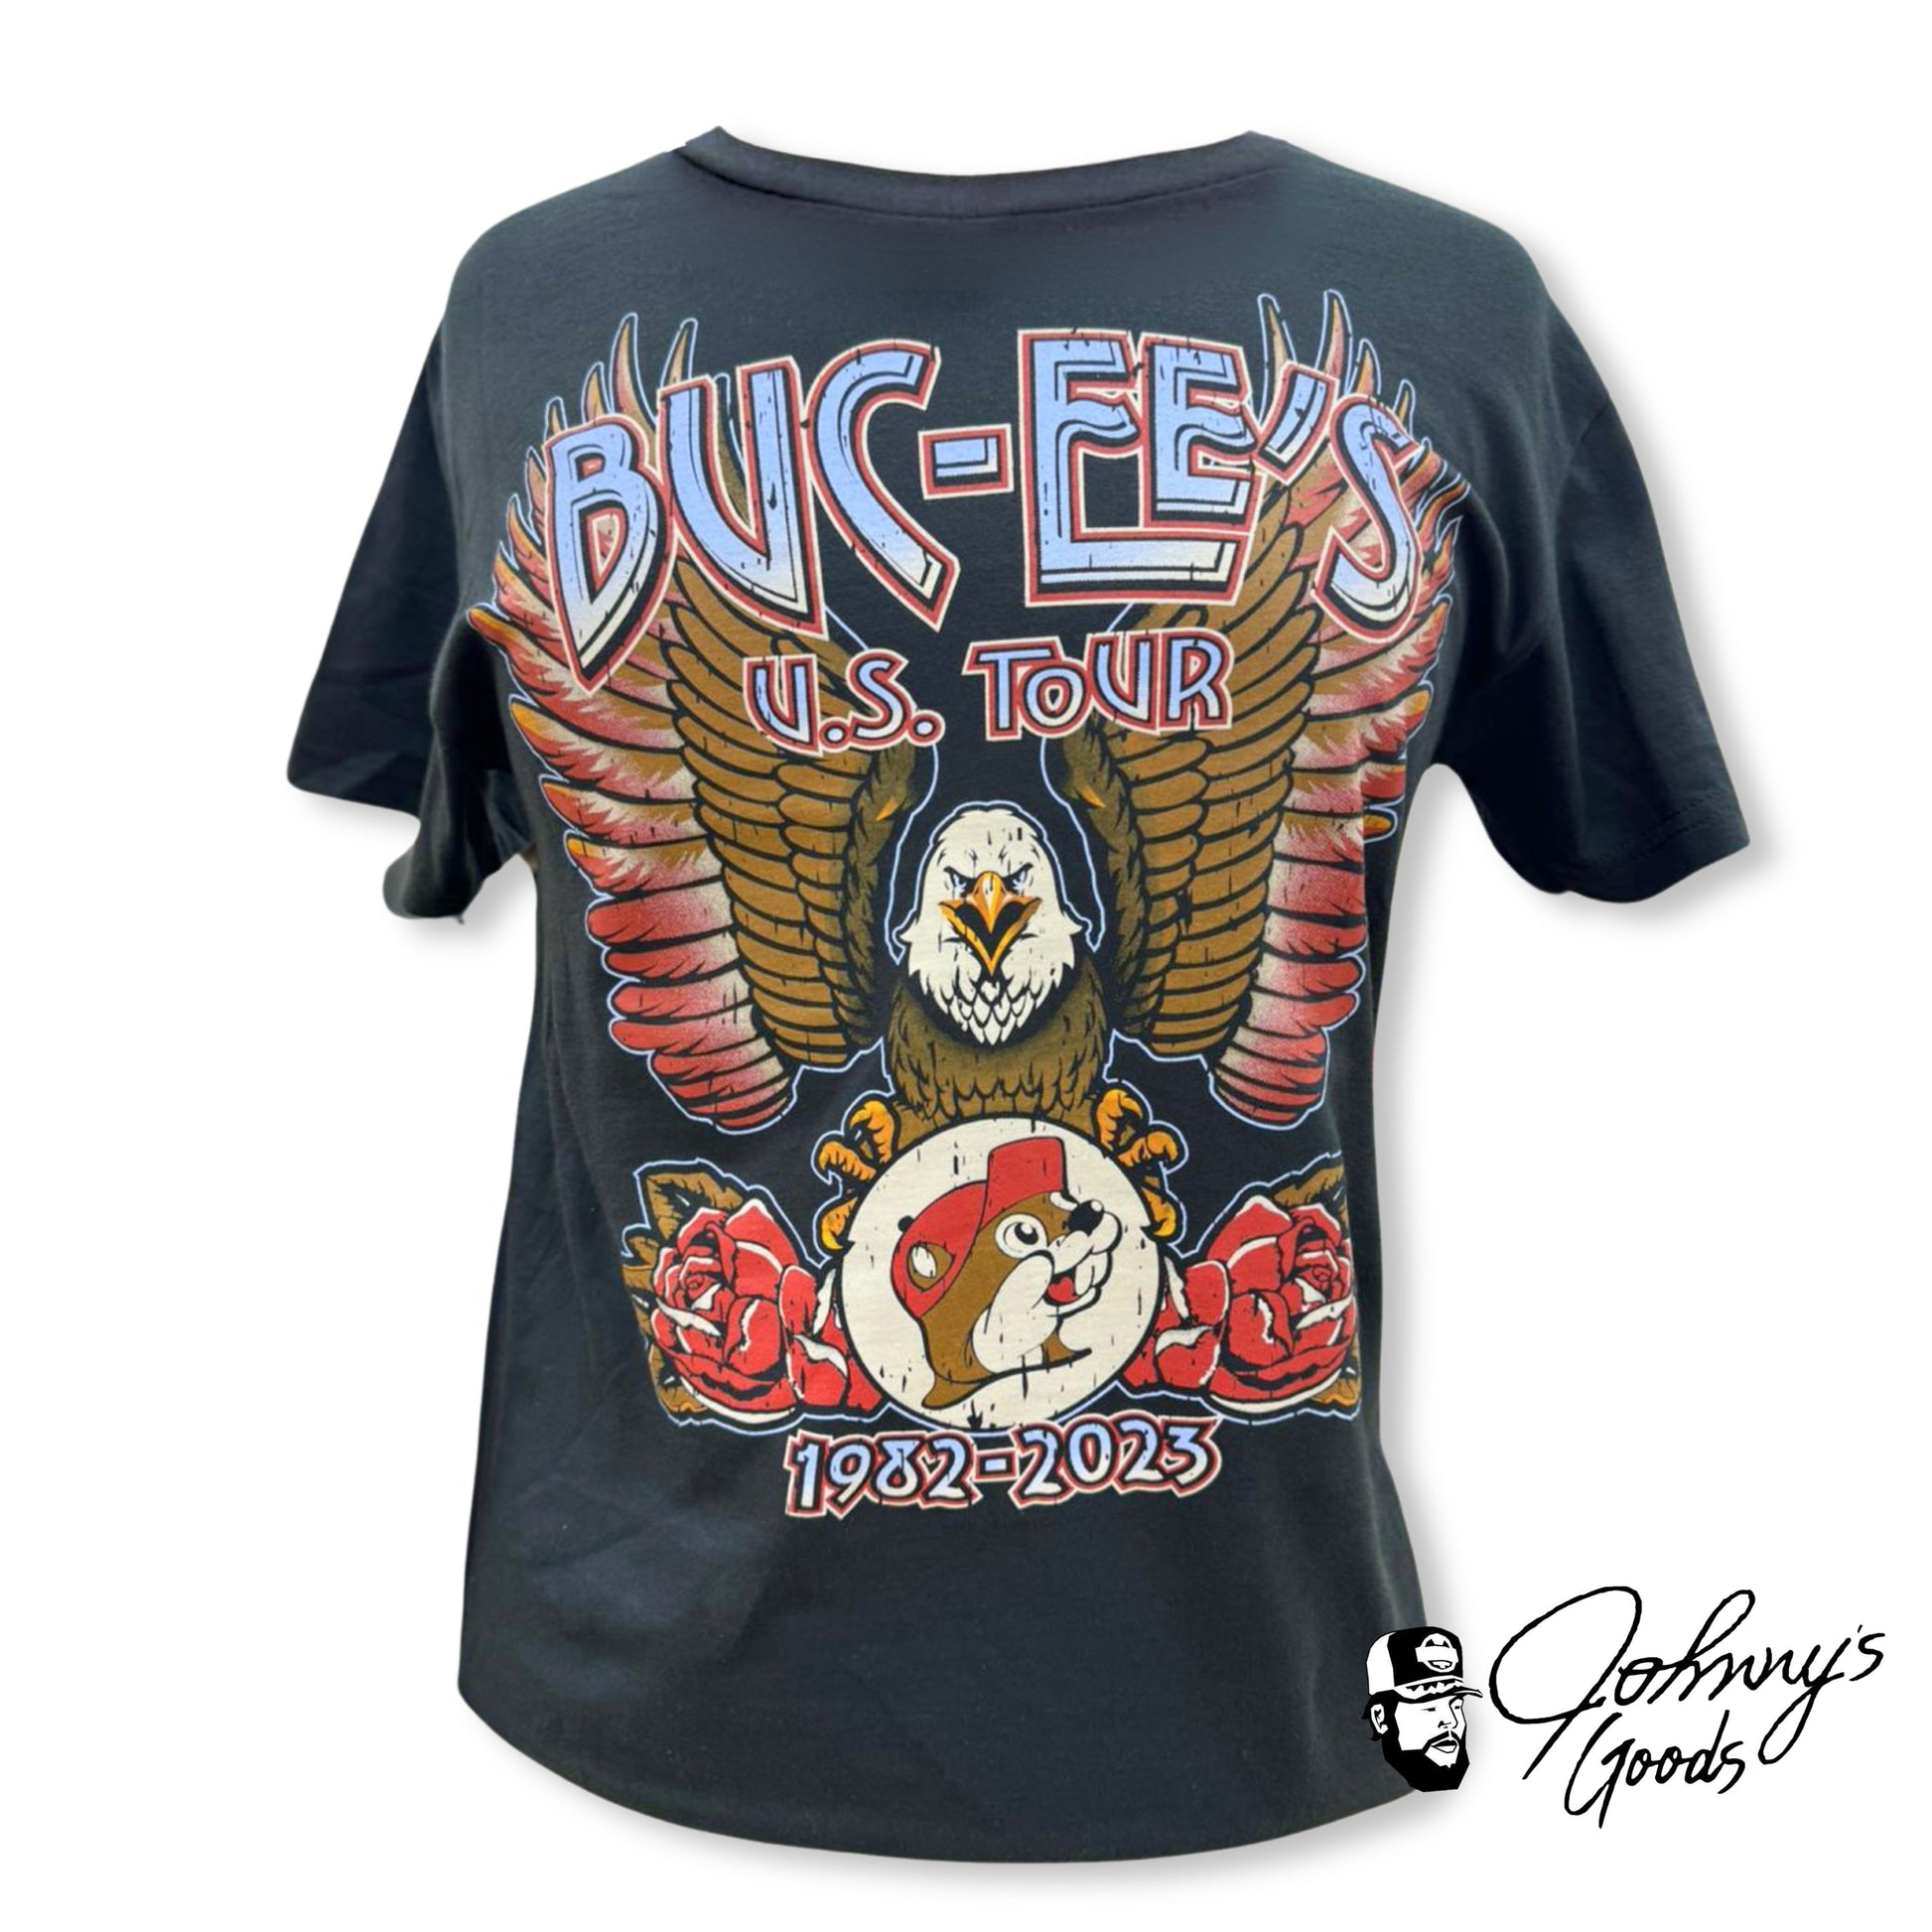 Buc-ee's US Tour Shirt 1982-2023 buc ees buc ee's bucees buccees buc-ees